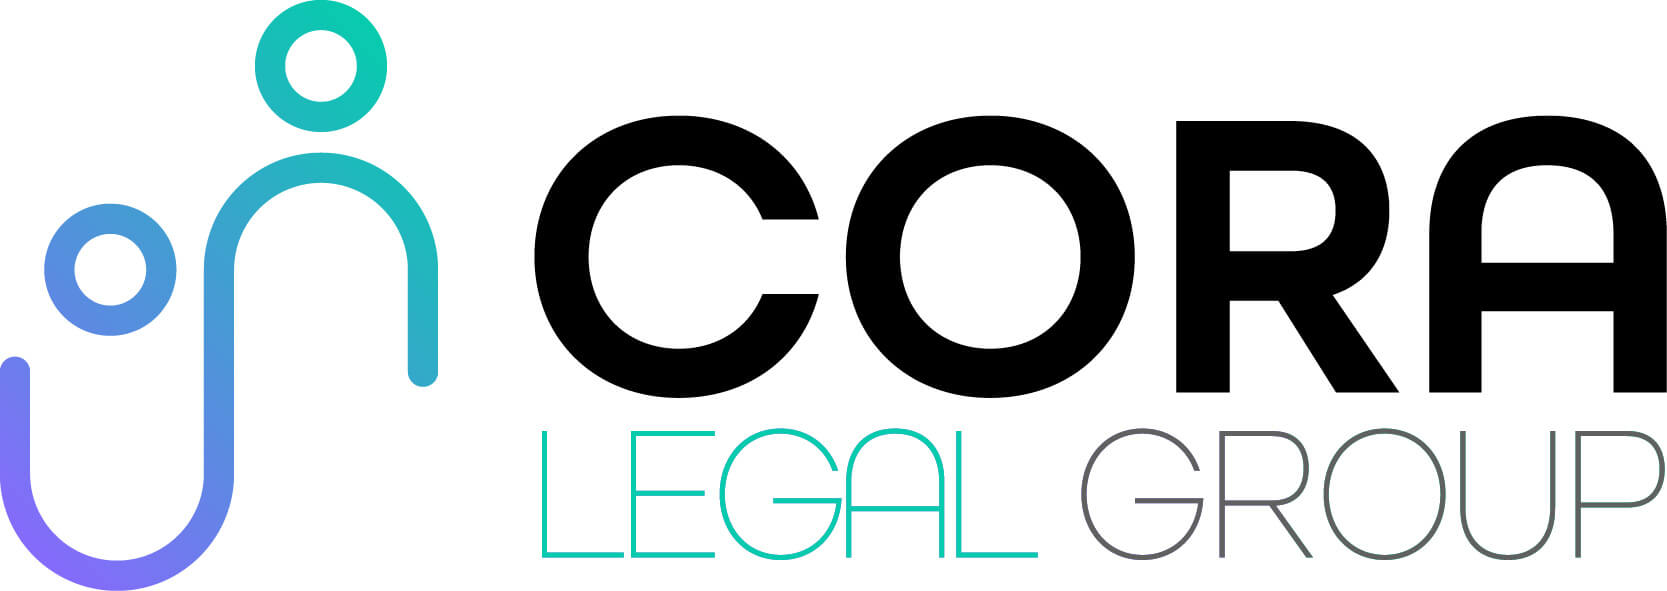 CORA Legal Group - Logo - Horizontal